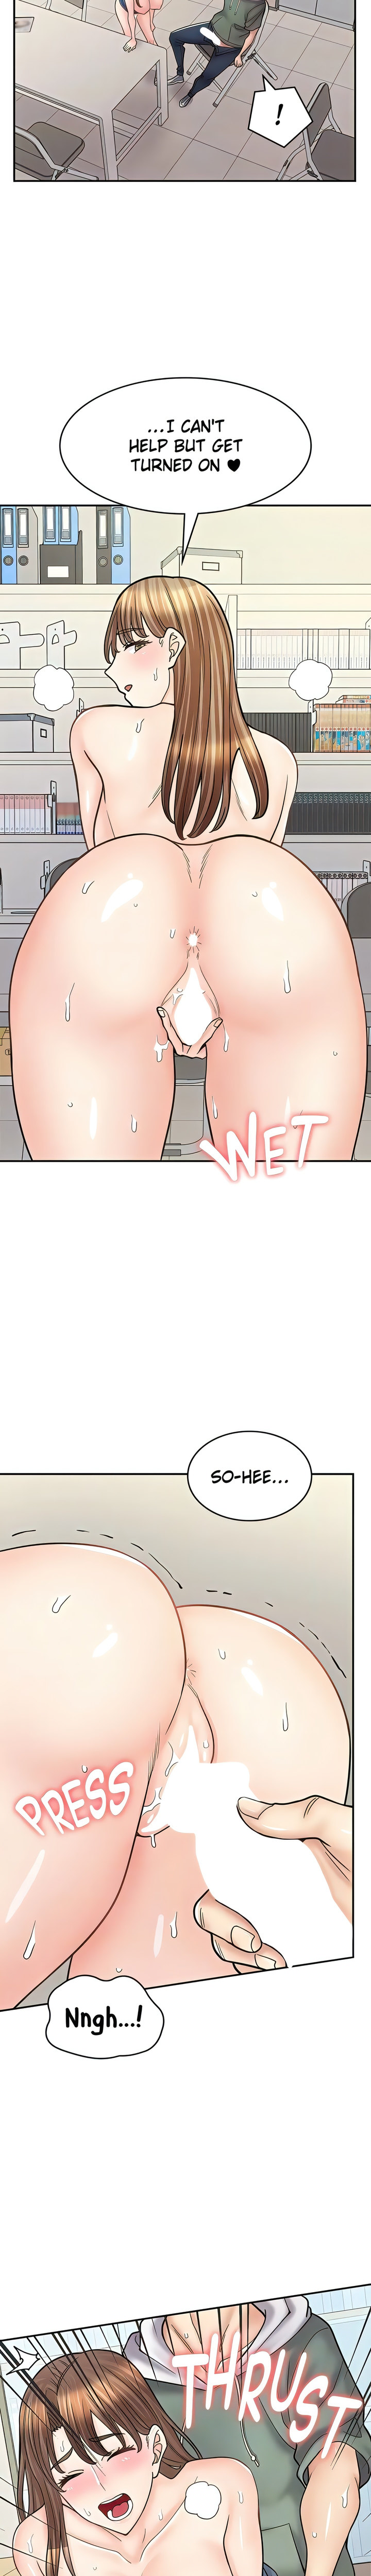 Erotic Manga Café Girls - Chapter 46 Page 7